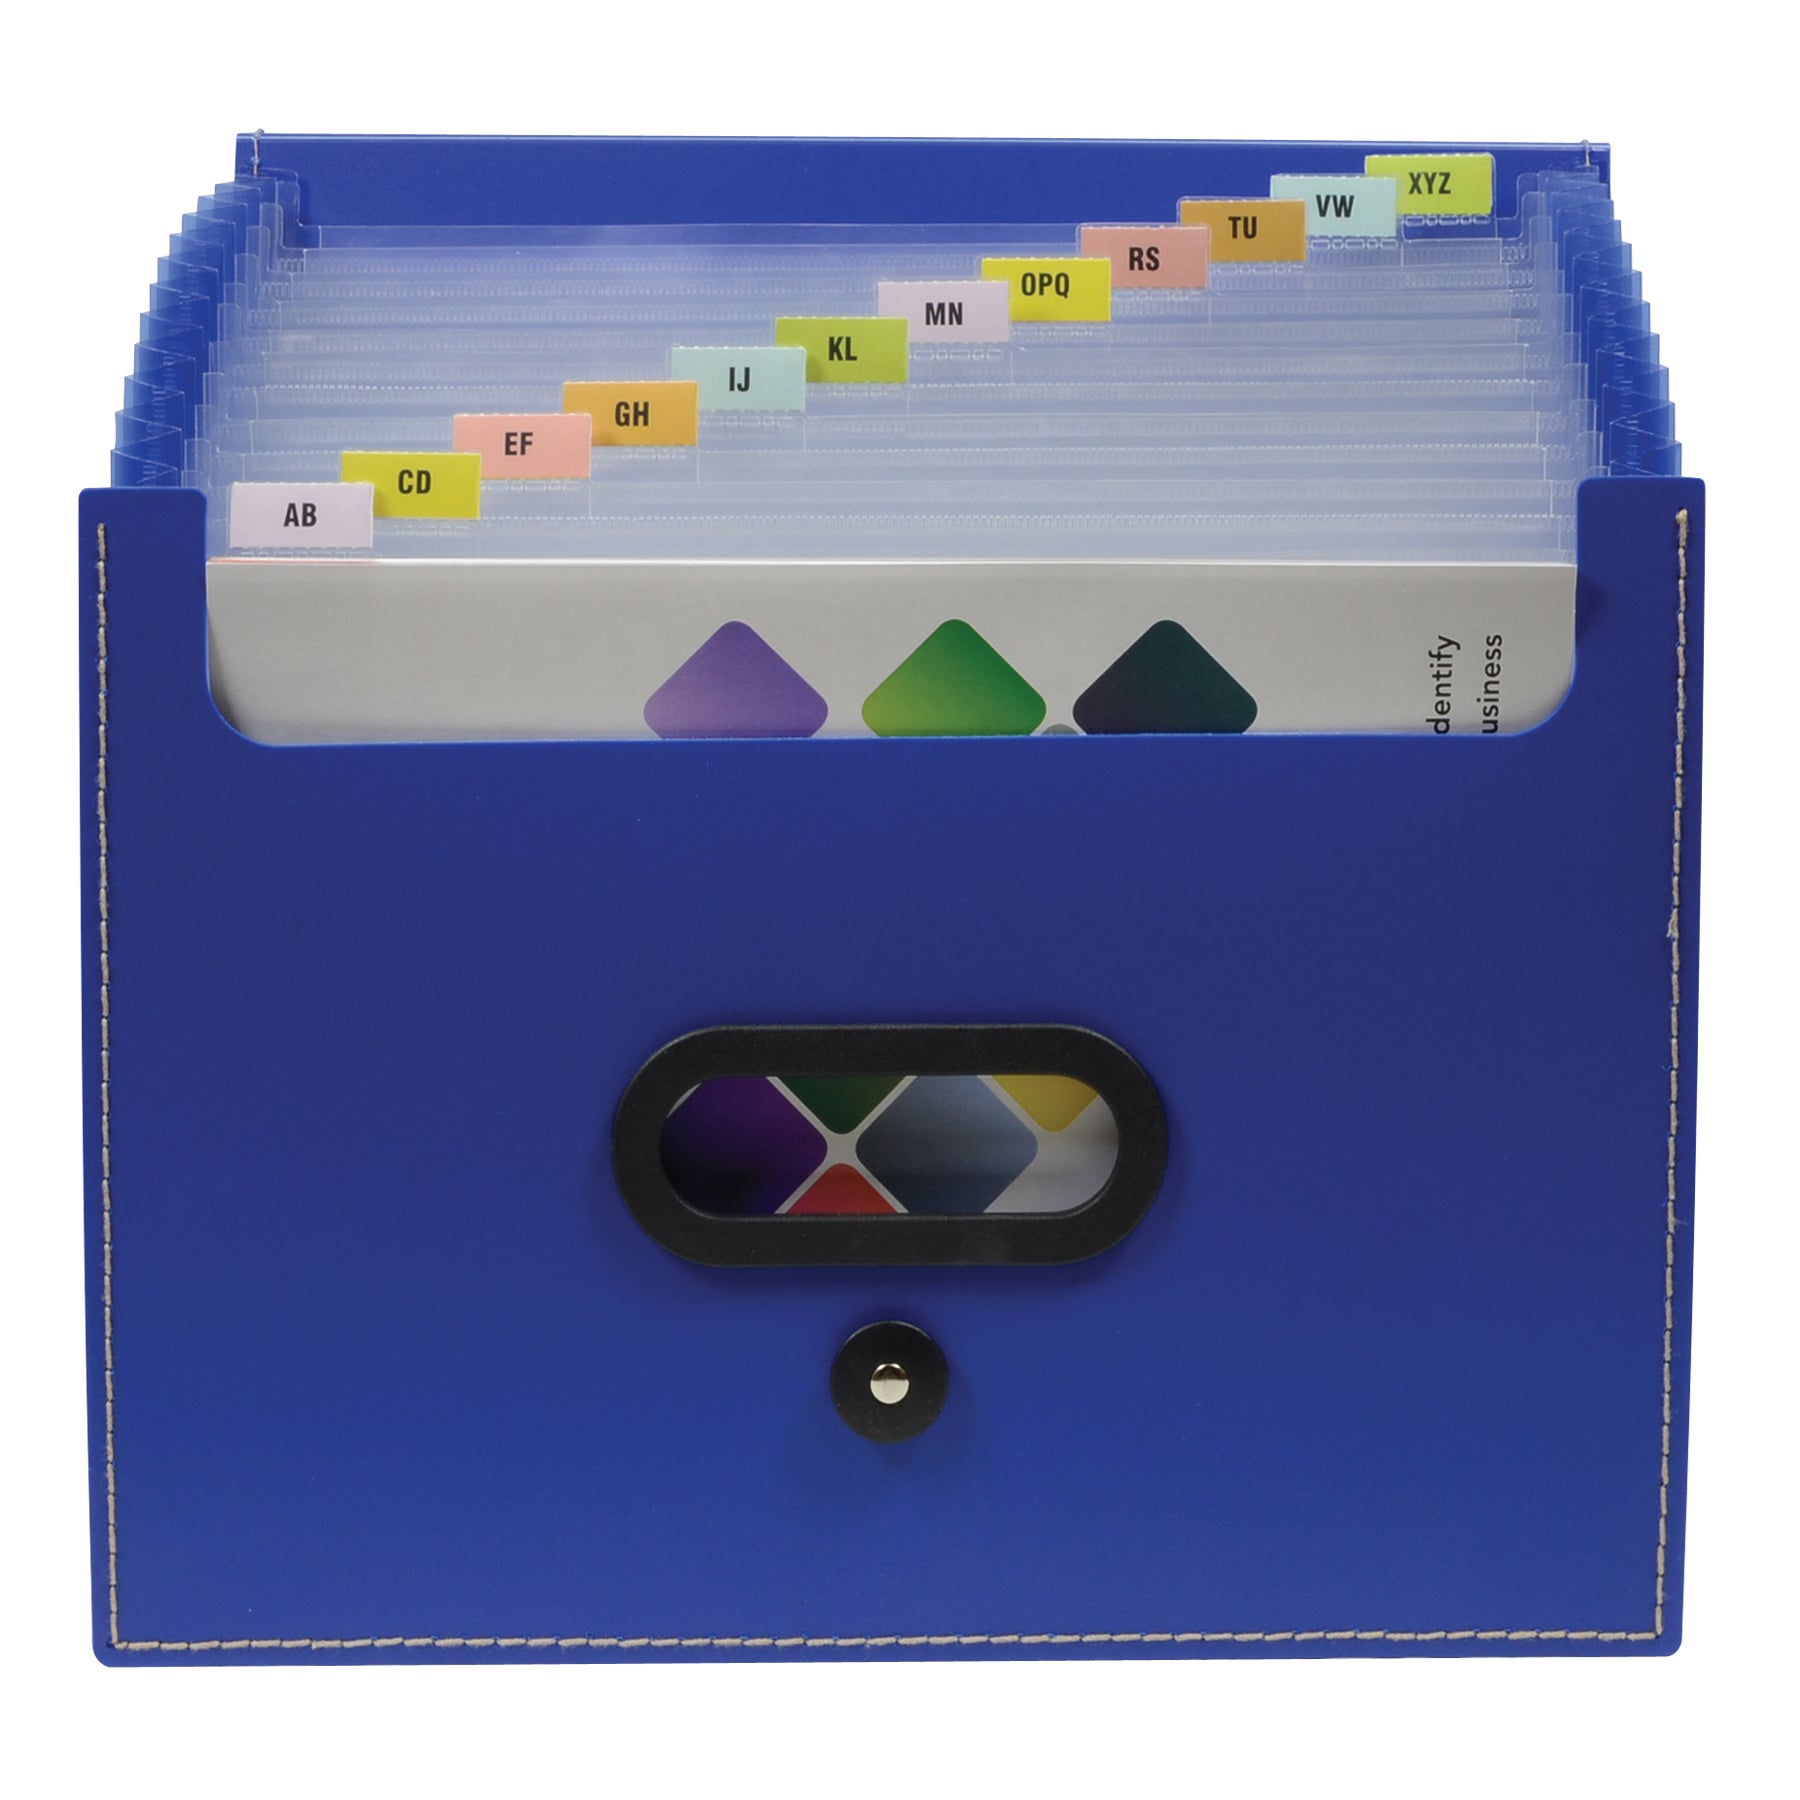 13-Pocket Ladder Expanding File, Blue - A1 School Supplies